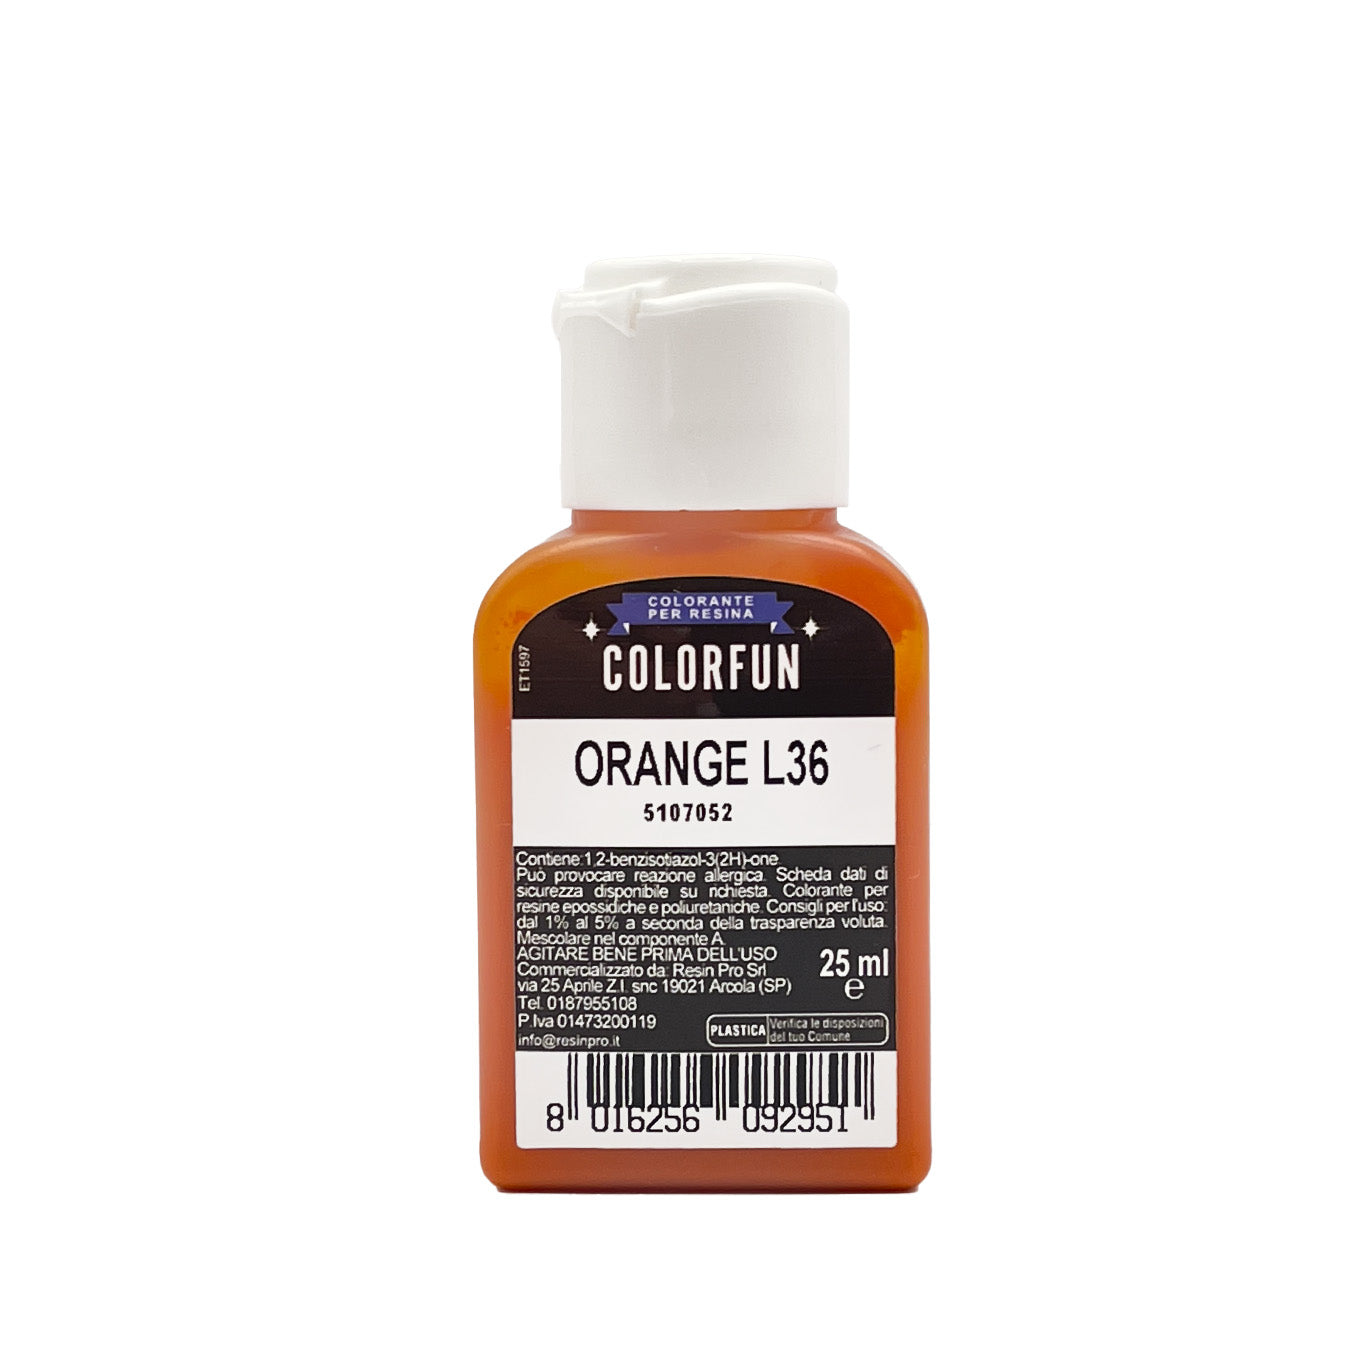 COLORFUN DELUXE - Orange